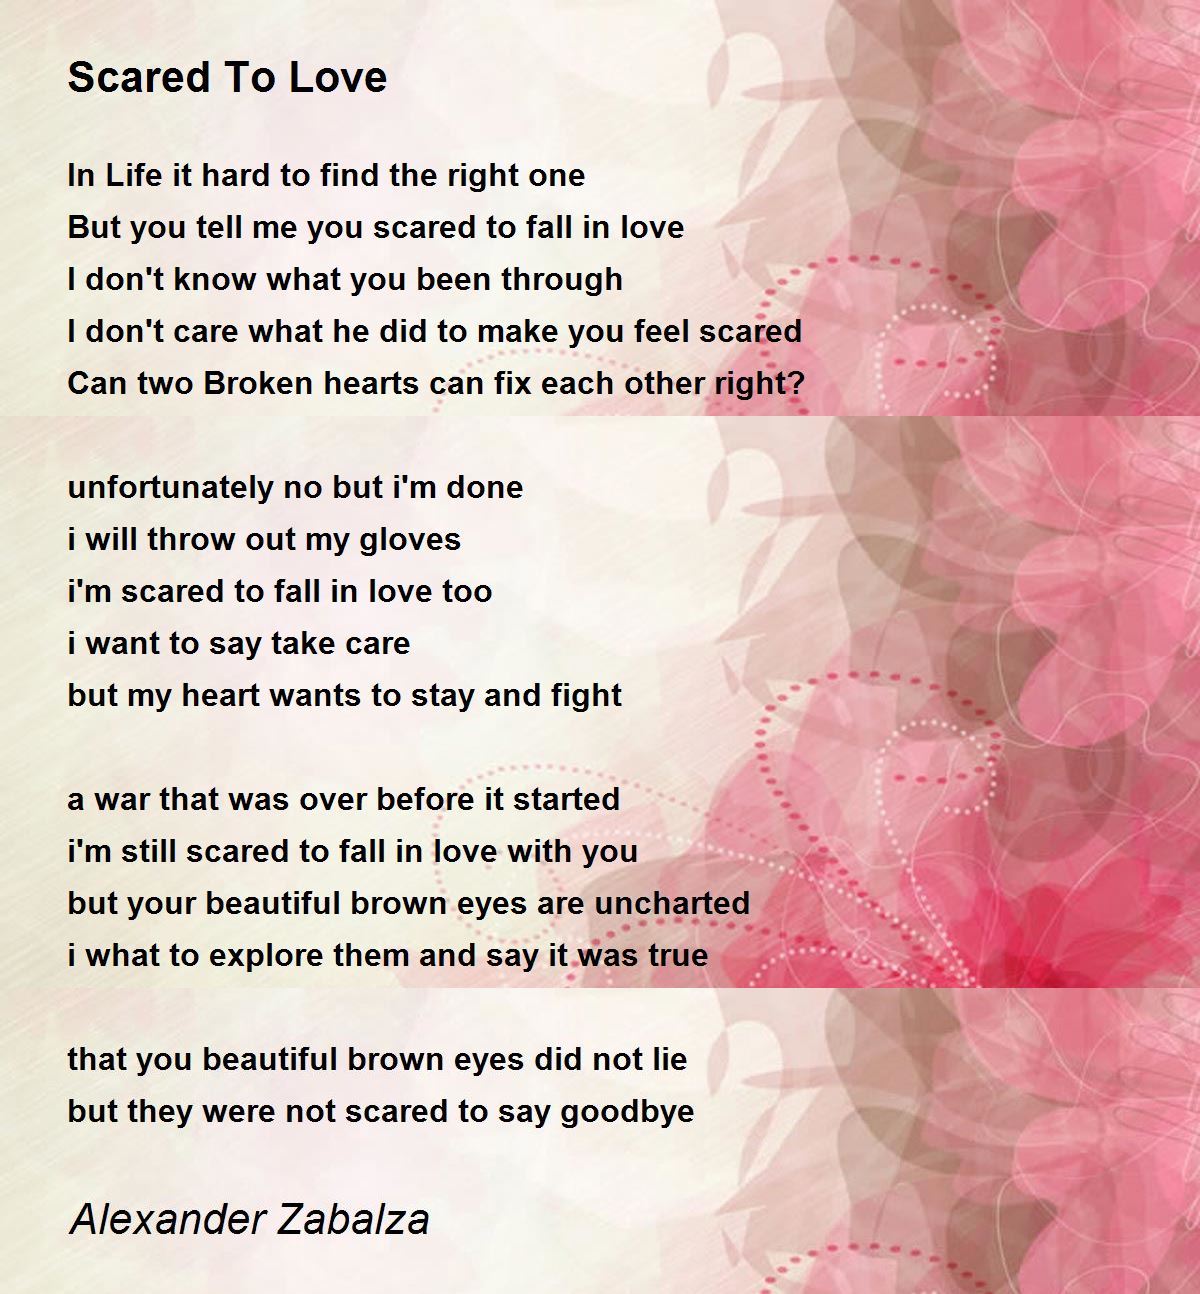 Scared To Love - Scared To Love Poem by Alexander Zabalza